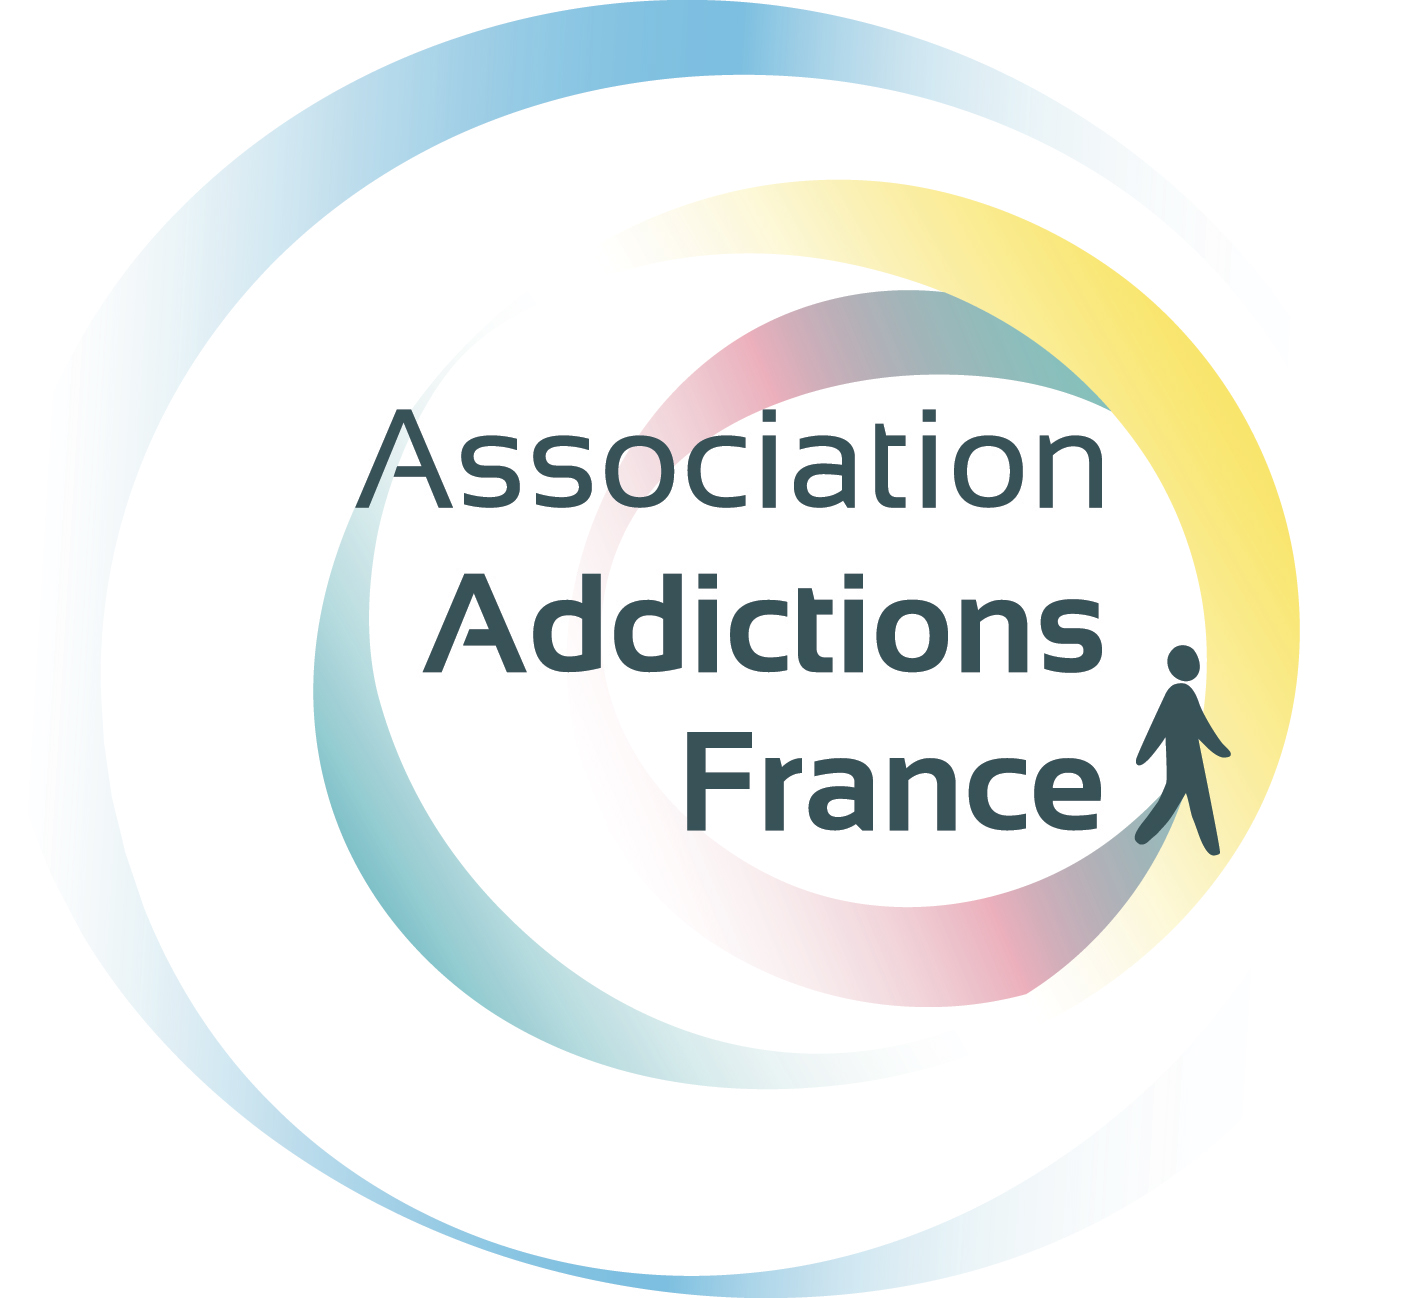 Association Addictions France